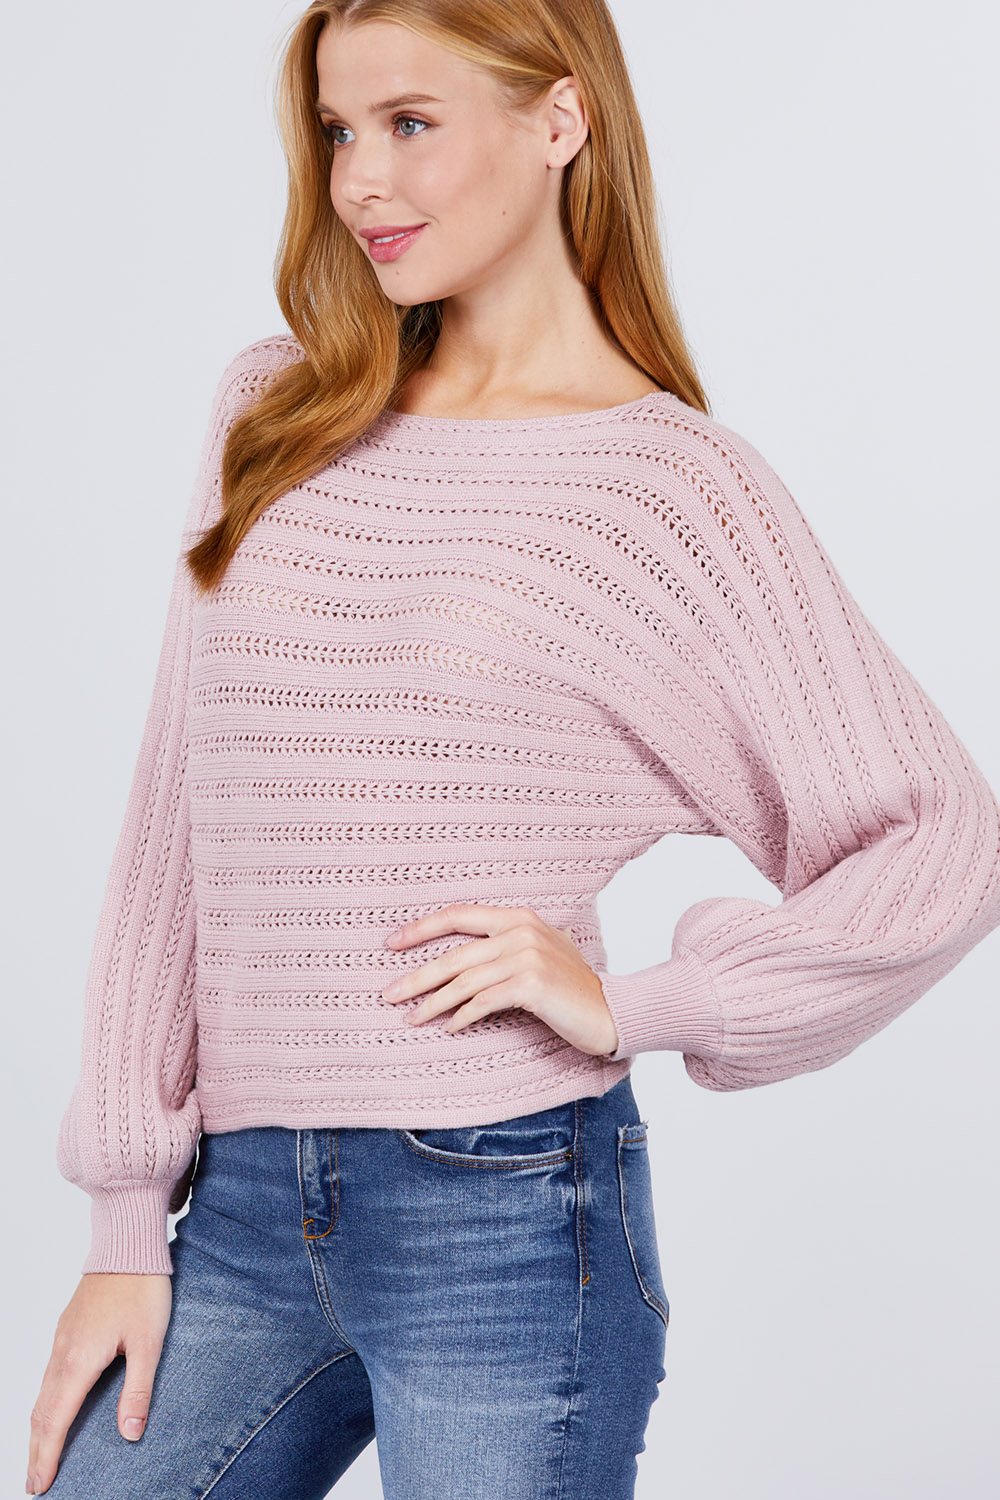 Dolman Sweater